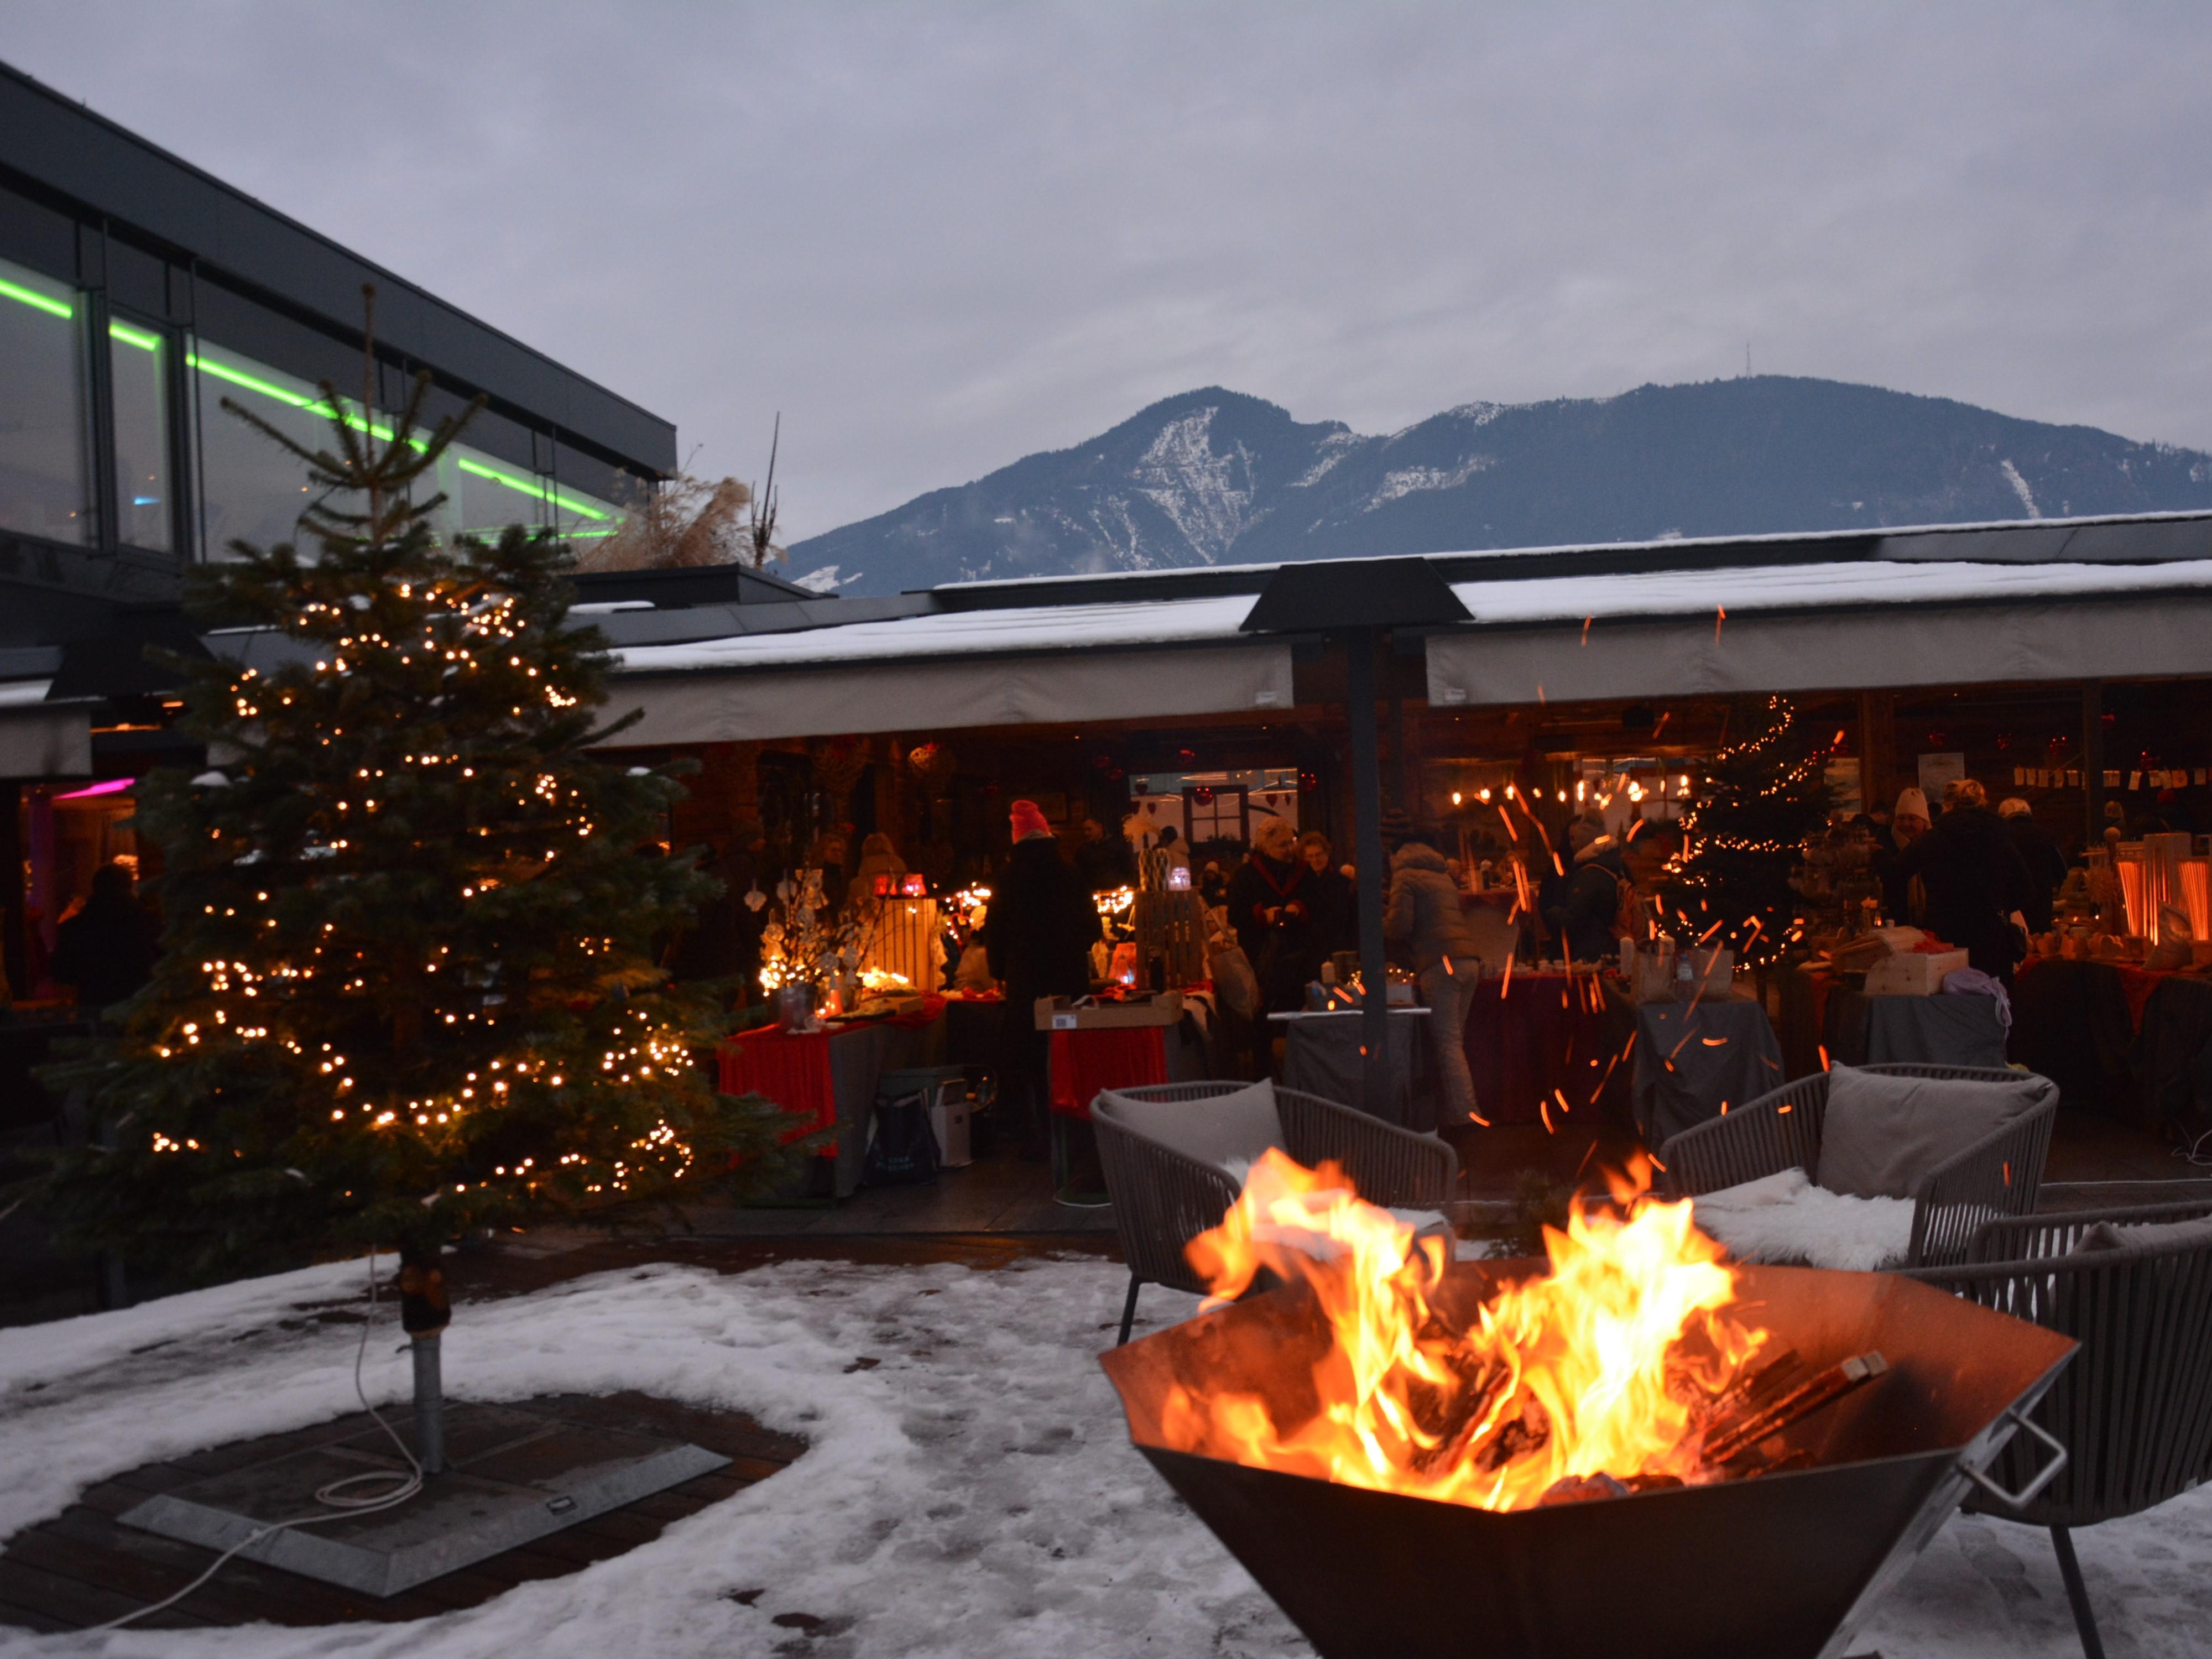 Christmas market at Sportresort Alpenblick in Zell am See